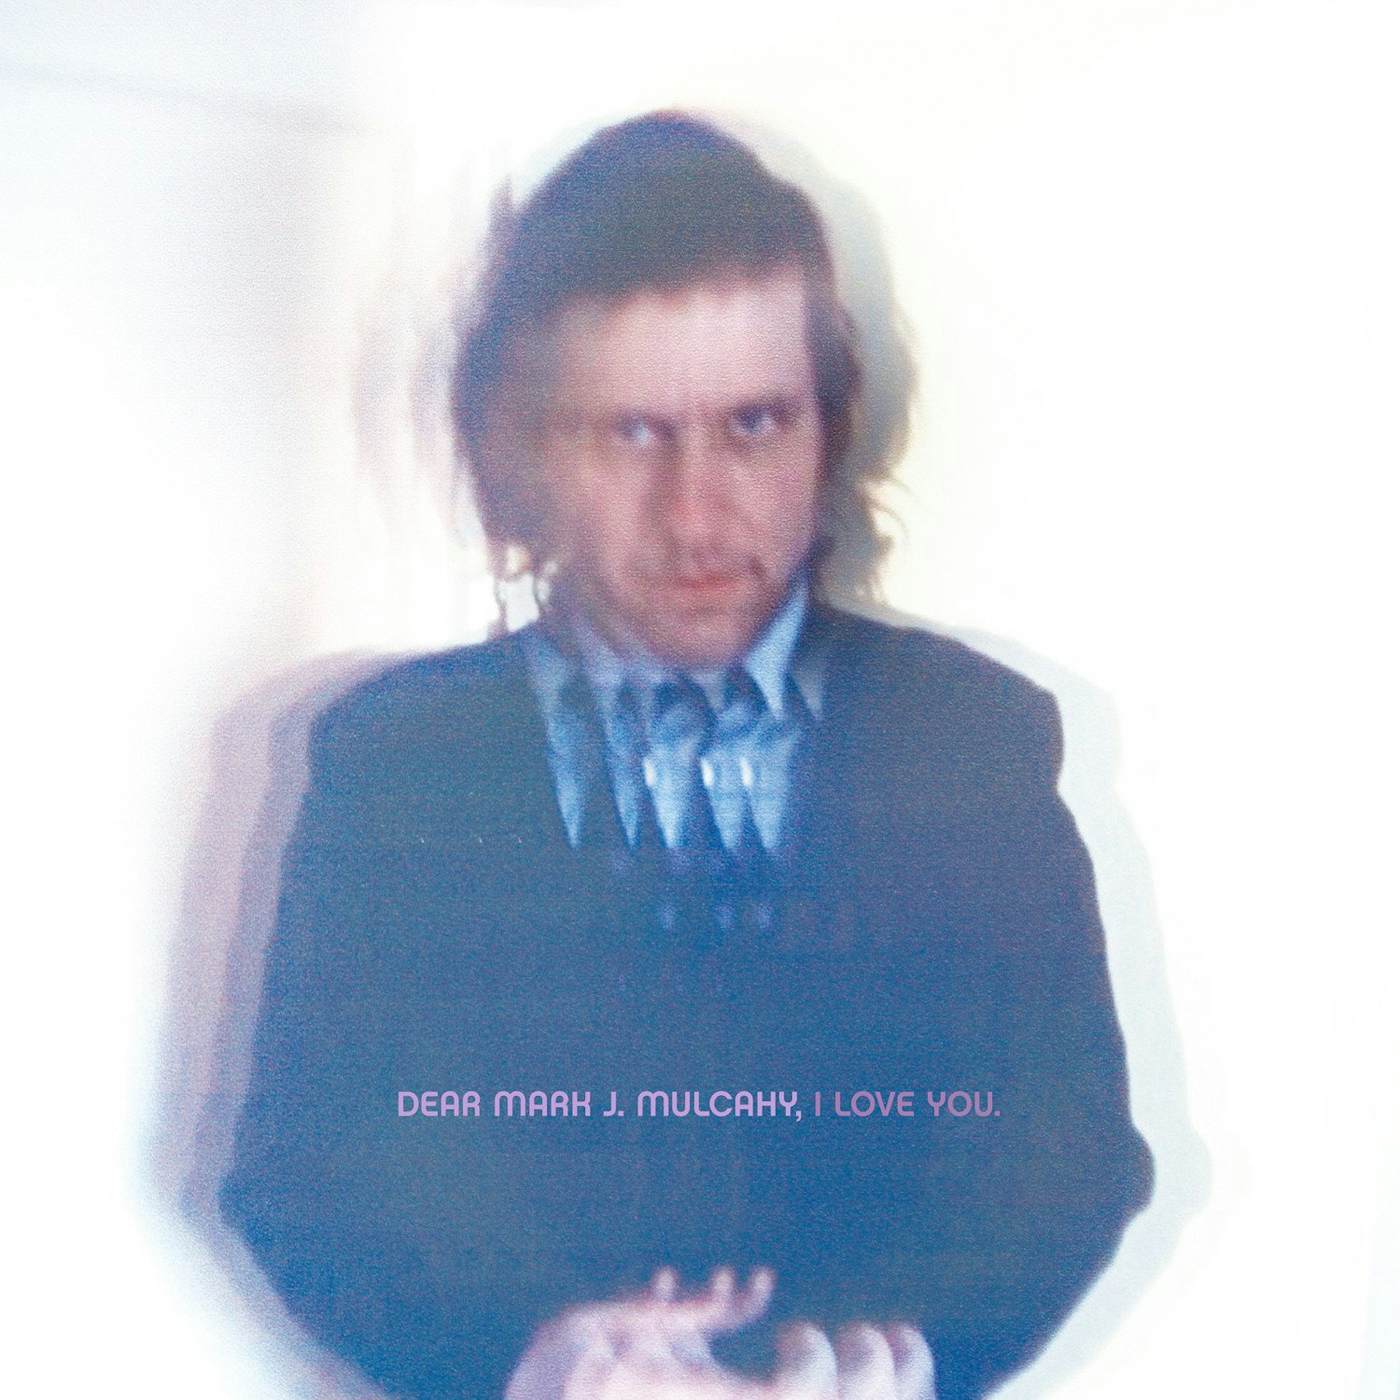 Mark Mulcahy 'Dear M. J. Mulcahy I Love You' Vinyl Record